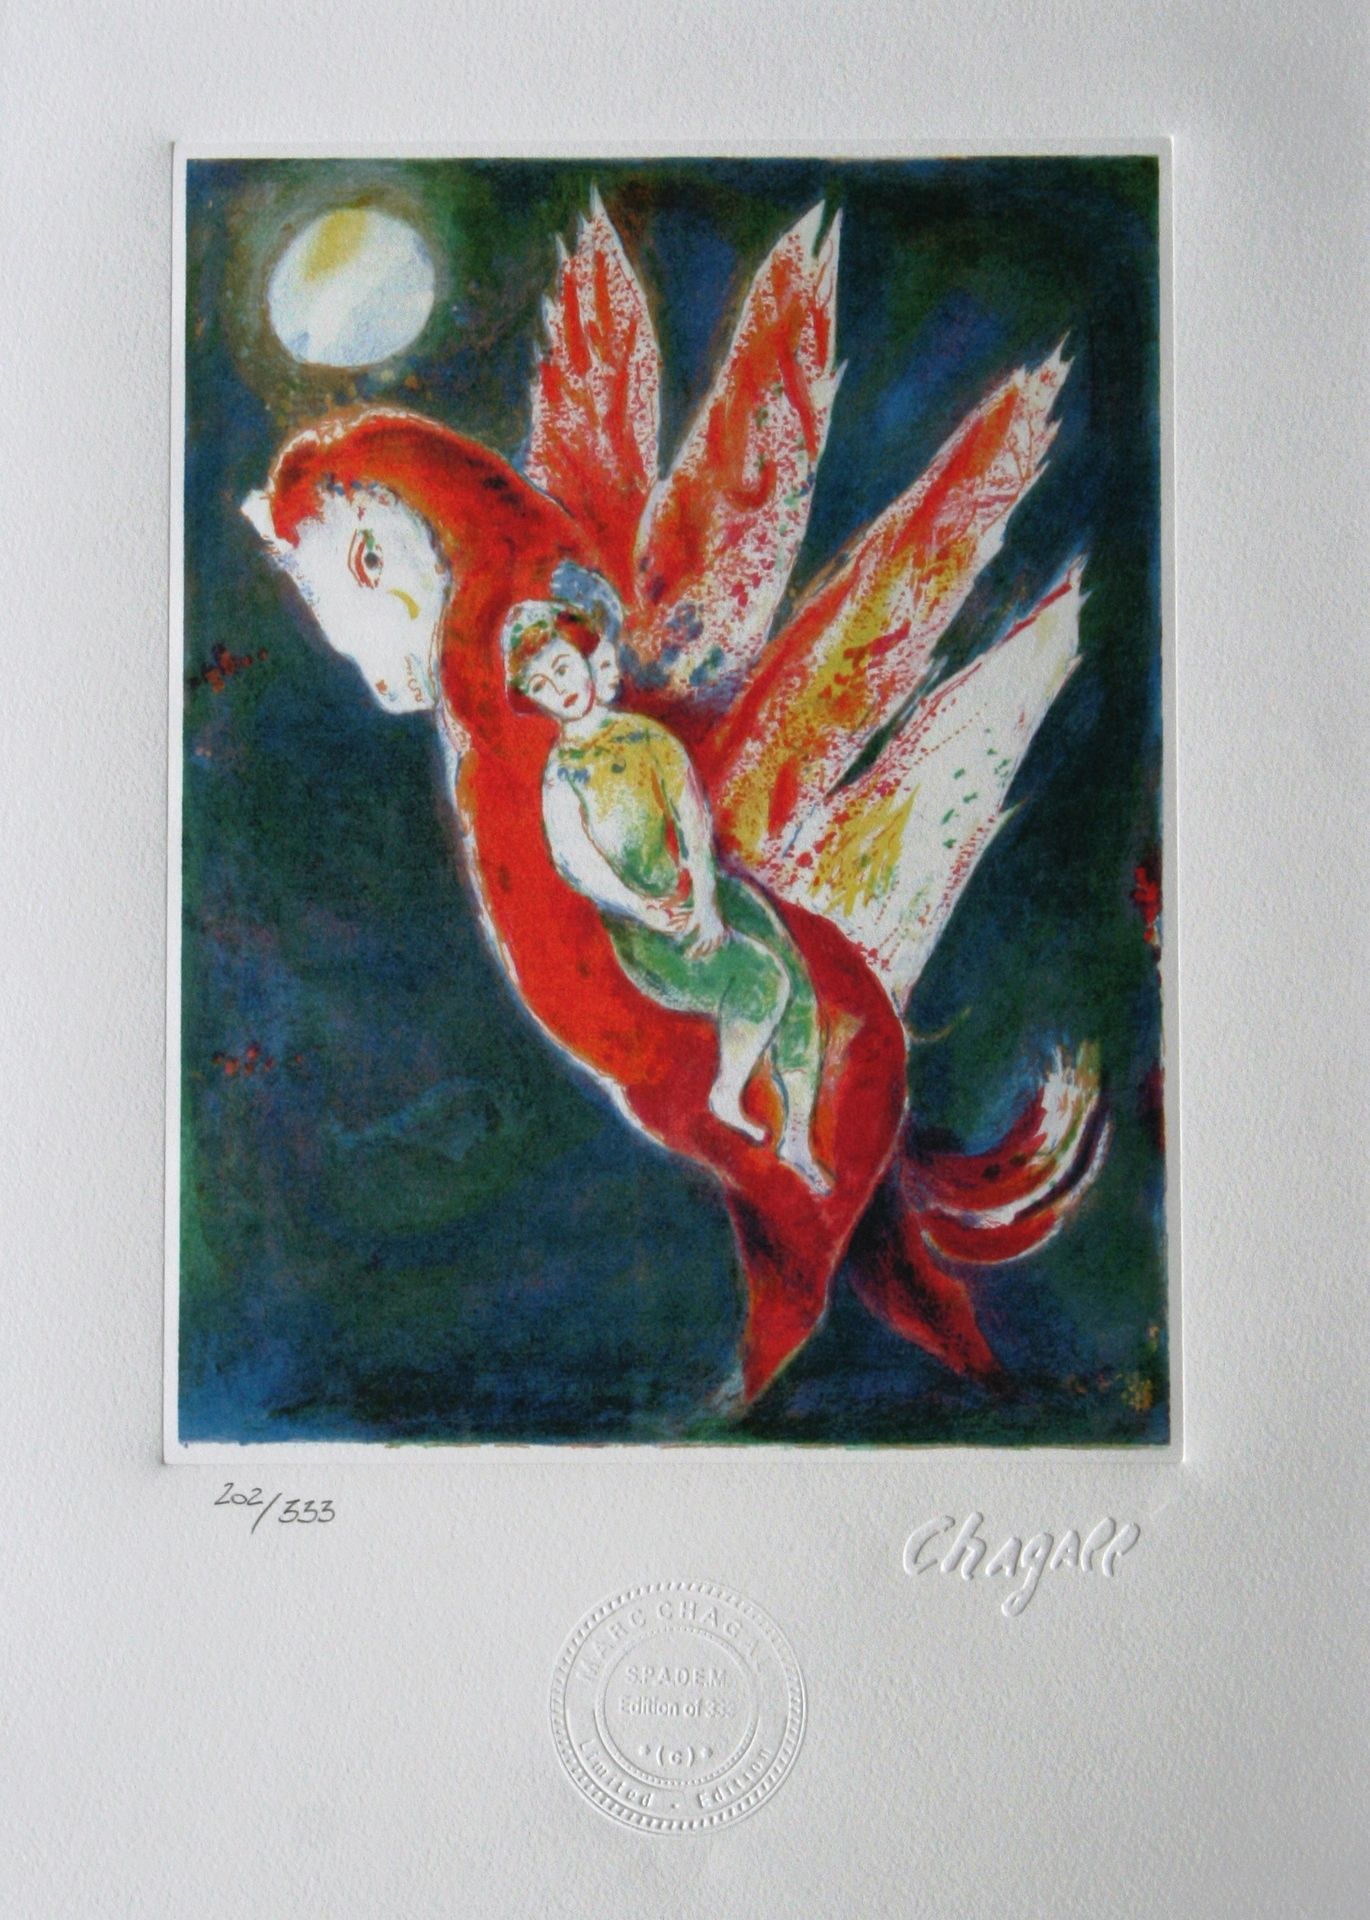 Marc Chagall 马克-夏加尔 (1887-1985)

一千零一夜》, 1985

石版画

编号为333份，日期为1985年

板块中的签名

干印&hellip;